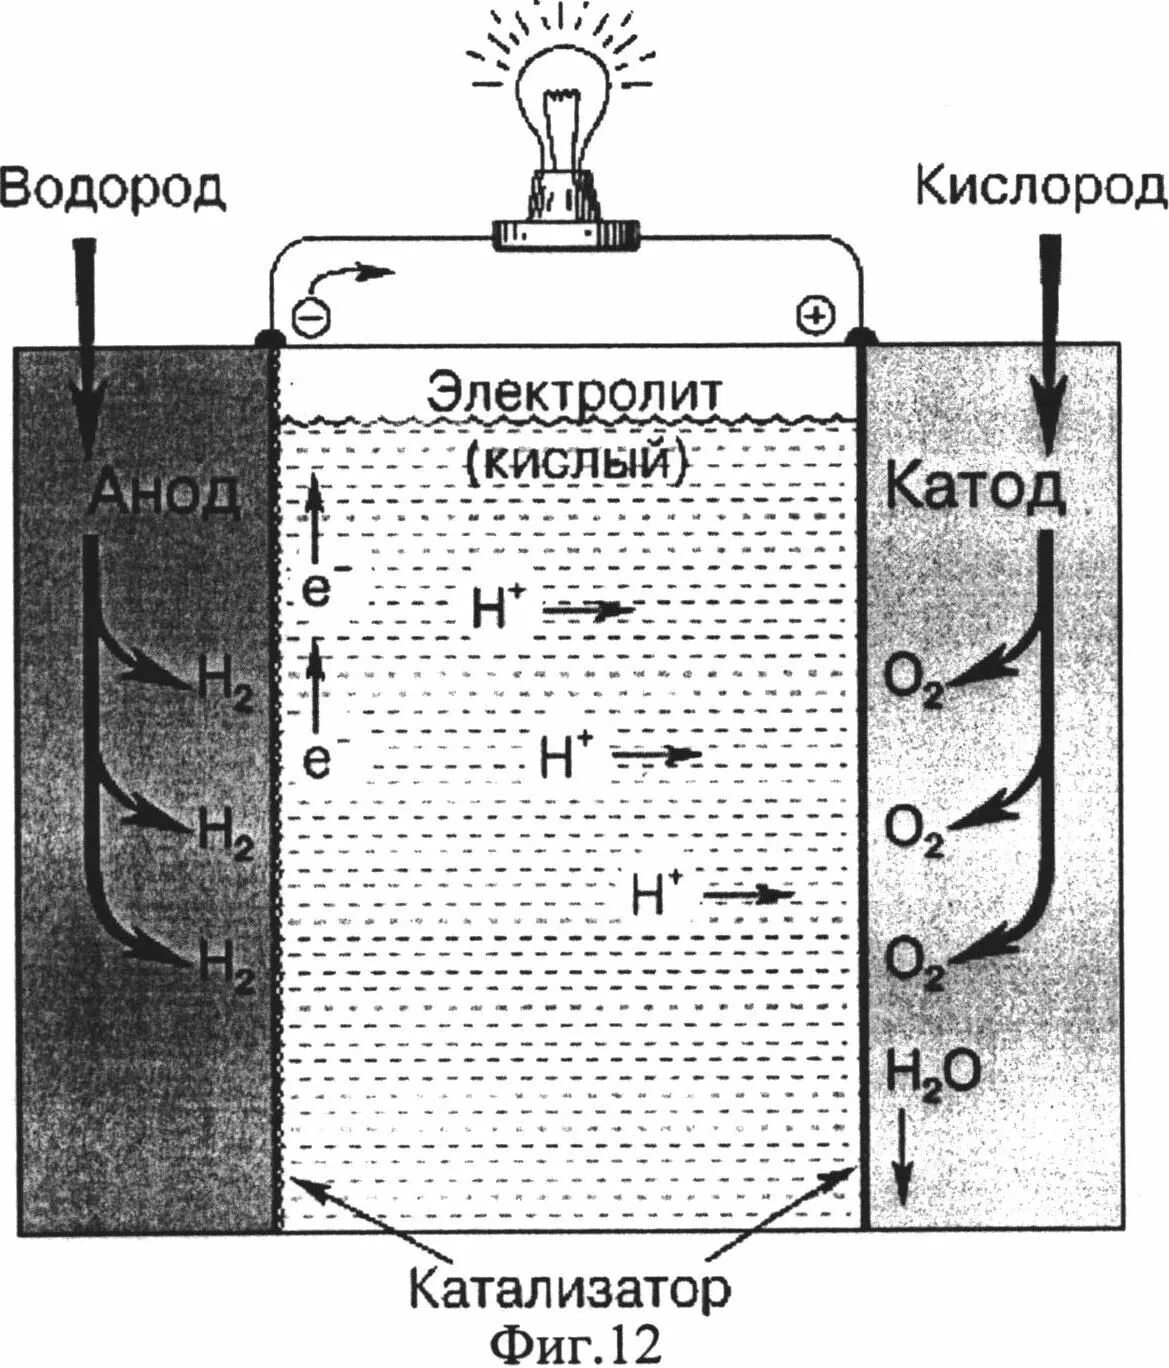 Водородный аккумулятор. Водородно-кислородный топливный элемент. Схема водородного топливного элемента. Схема водородно кислородного топливного элемента. Водород кислородный топливный элемент.